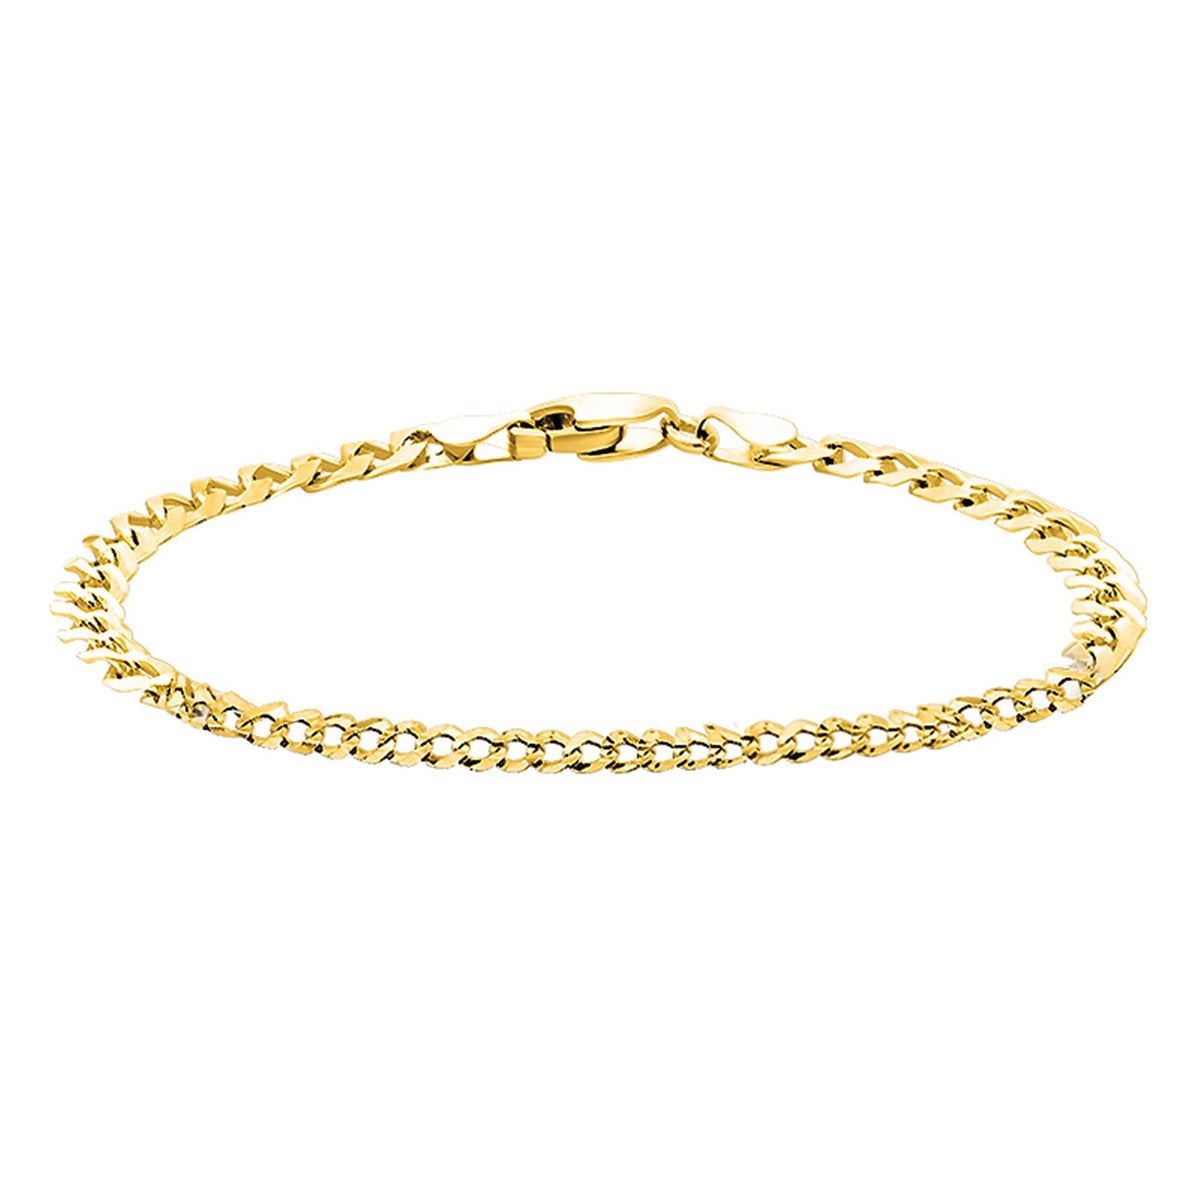 10Kt Yellow Gold 5.75mm Curb Link Bracelet